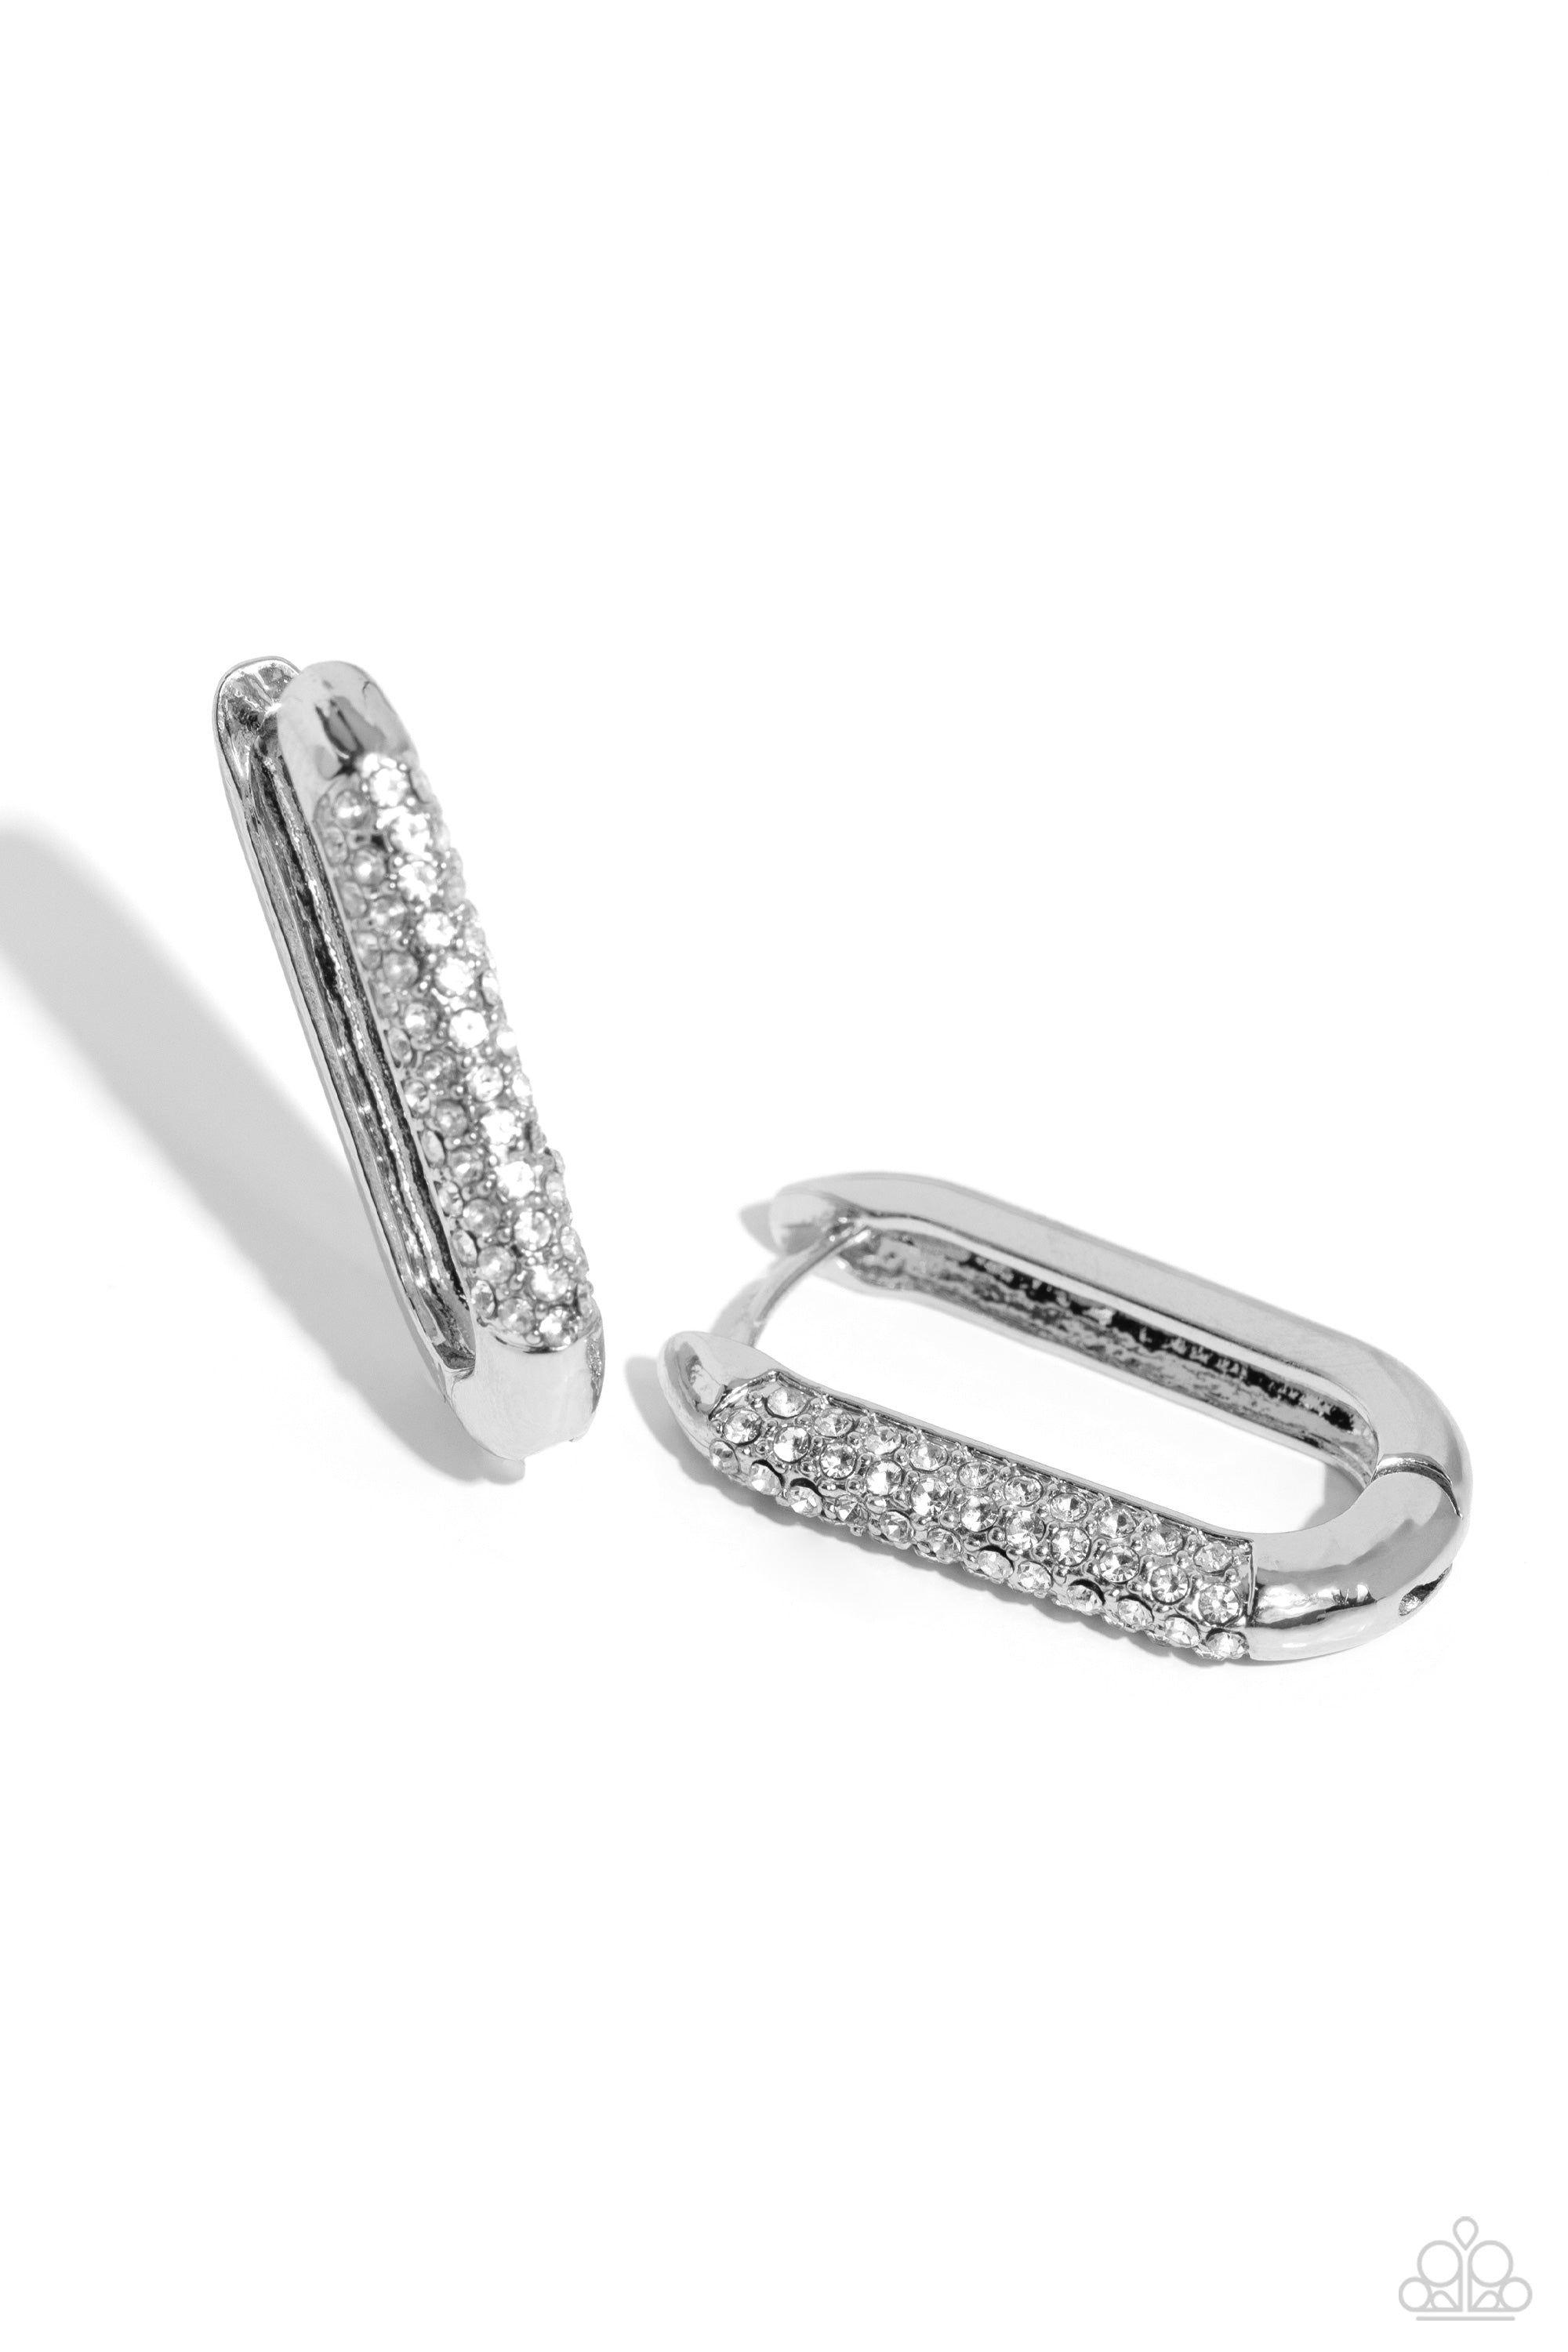 Generating Glitter White Rhinestone Hoop Earrings - Paparazzi Accessories- lightbox - CarasShop.com - $5 Jewelry by Cara Jewels